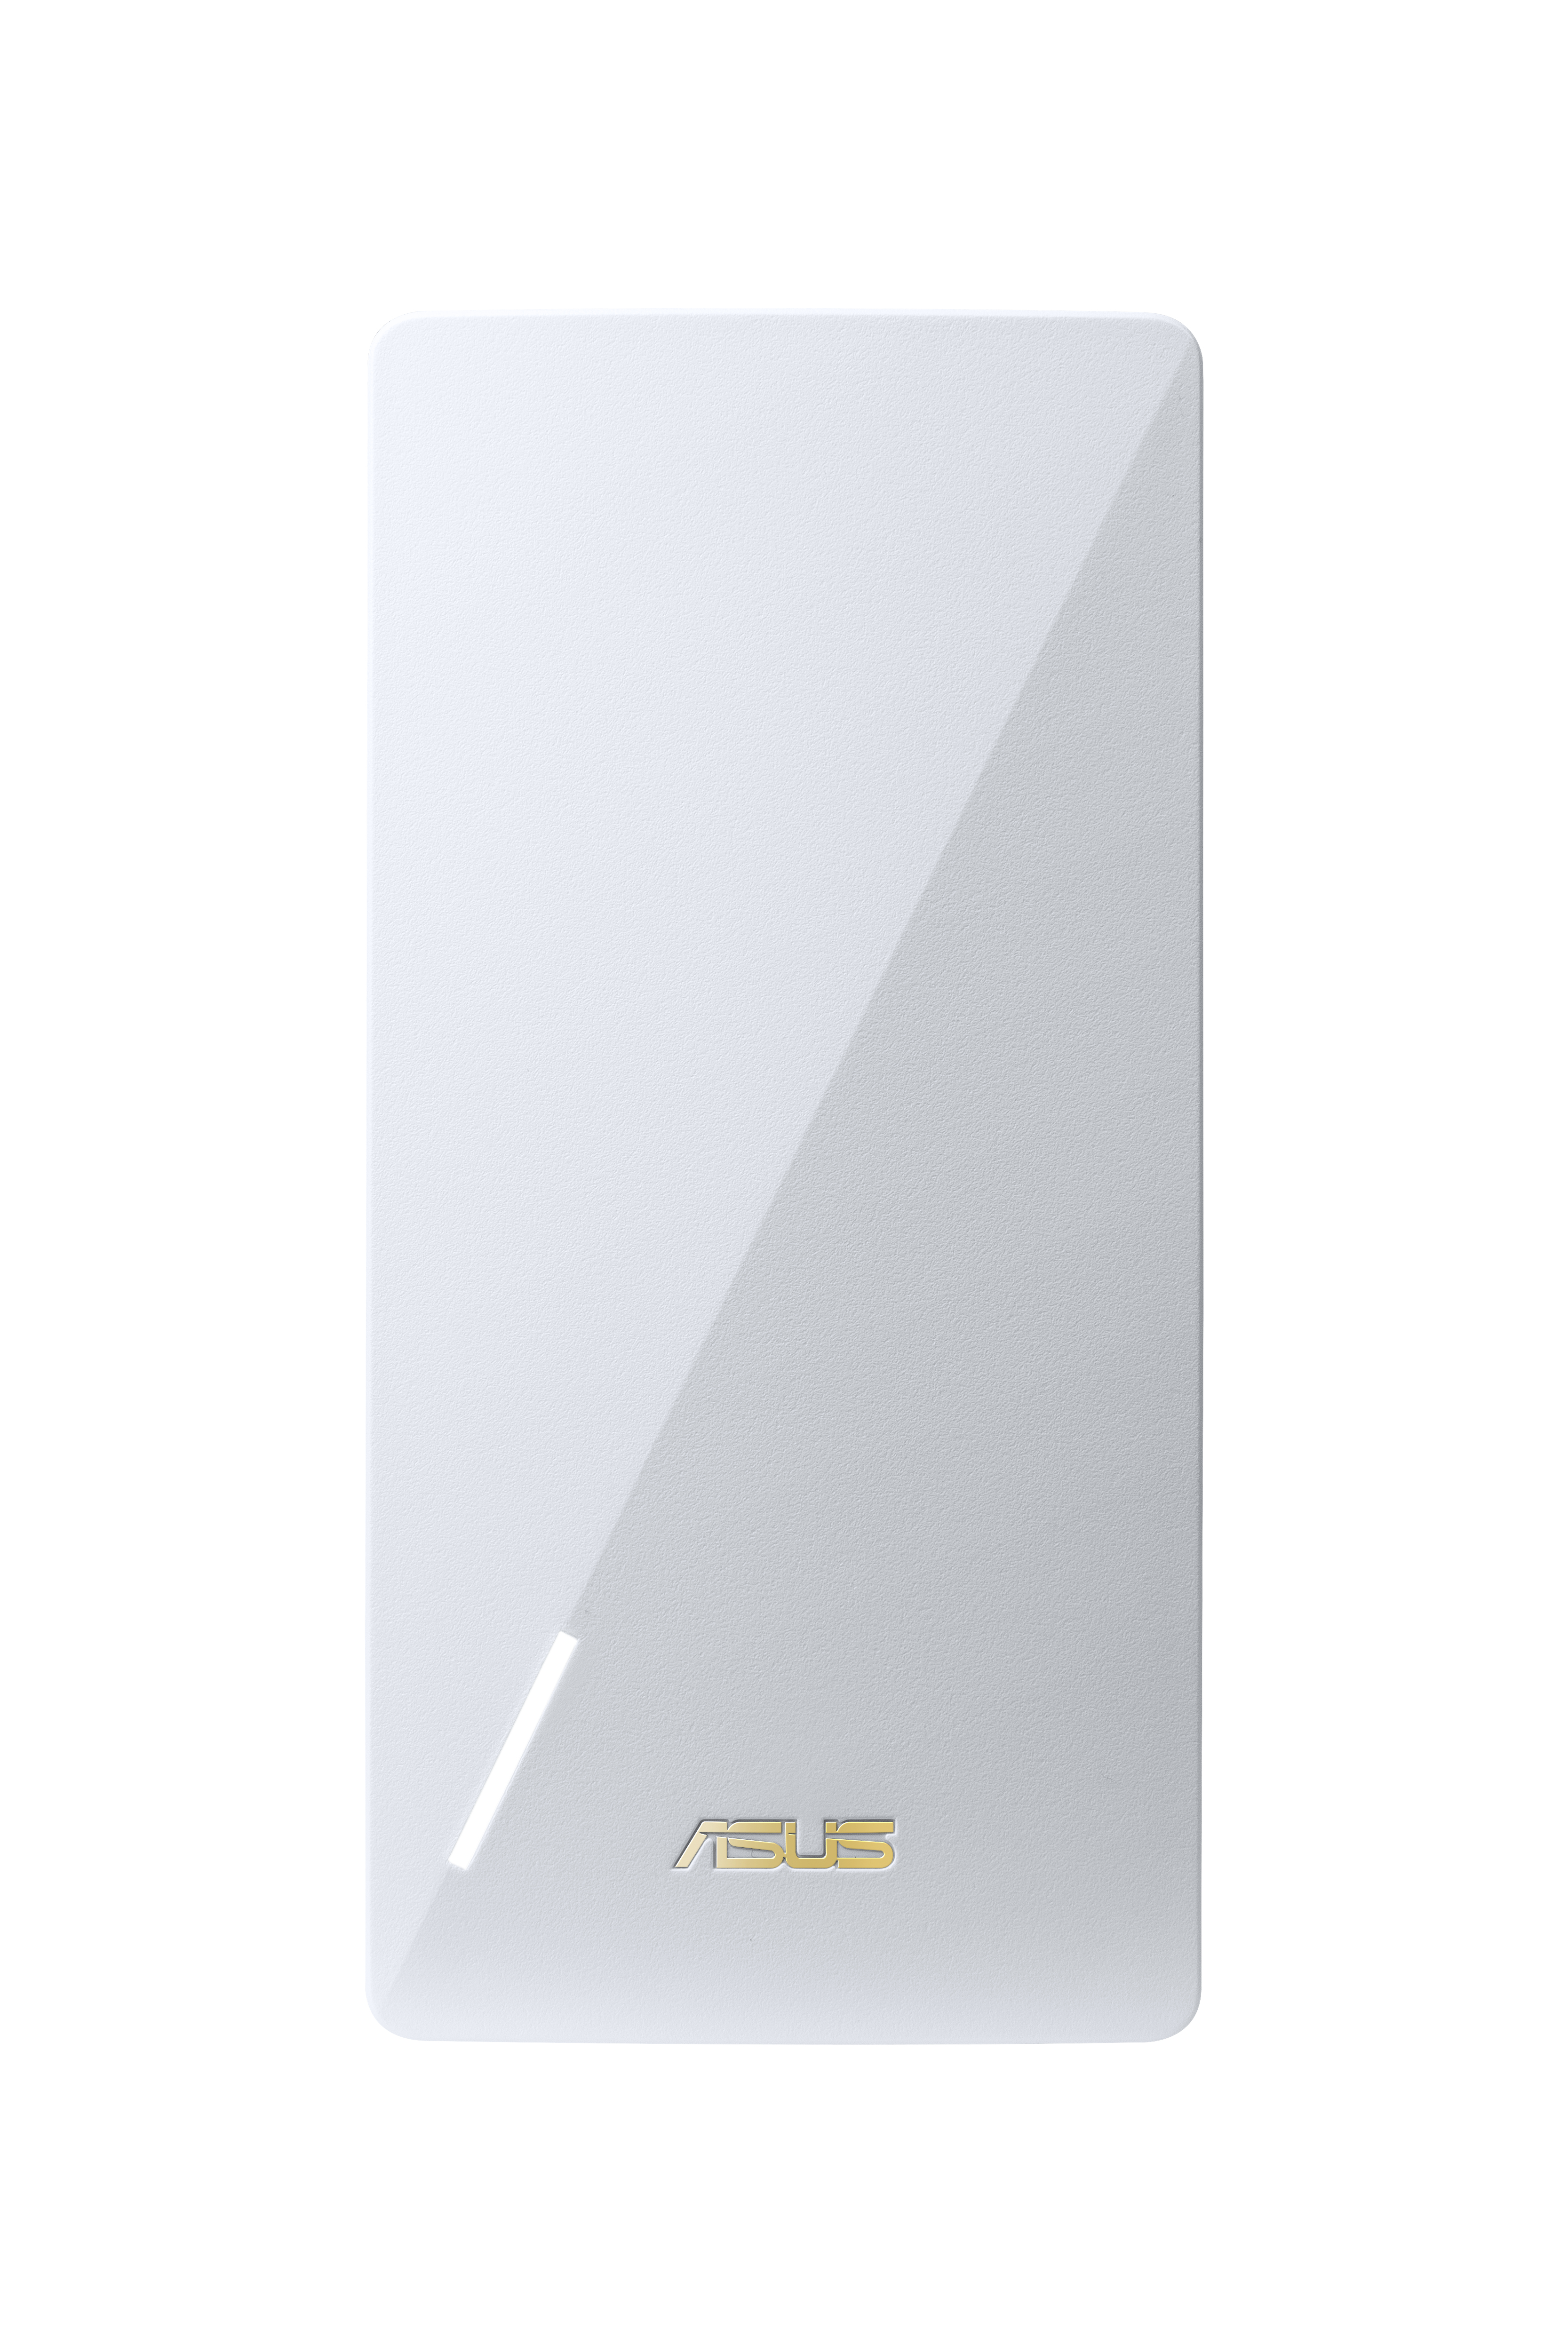 ASUS AX3000 Dualband WiFi 6 Range Extender